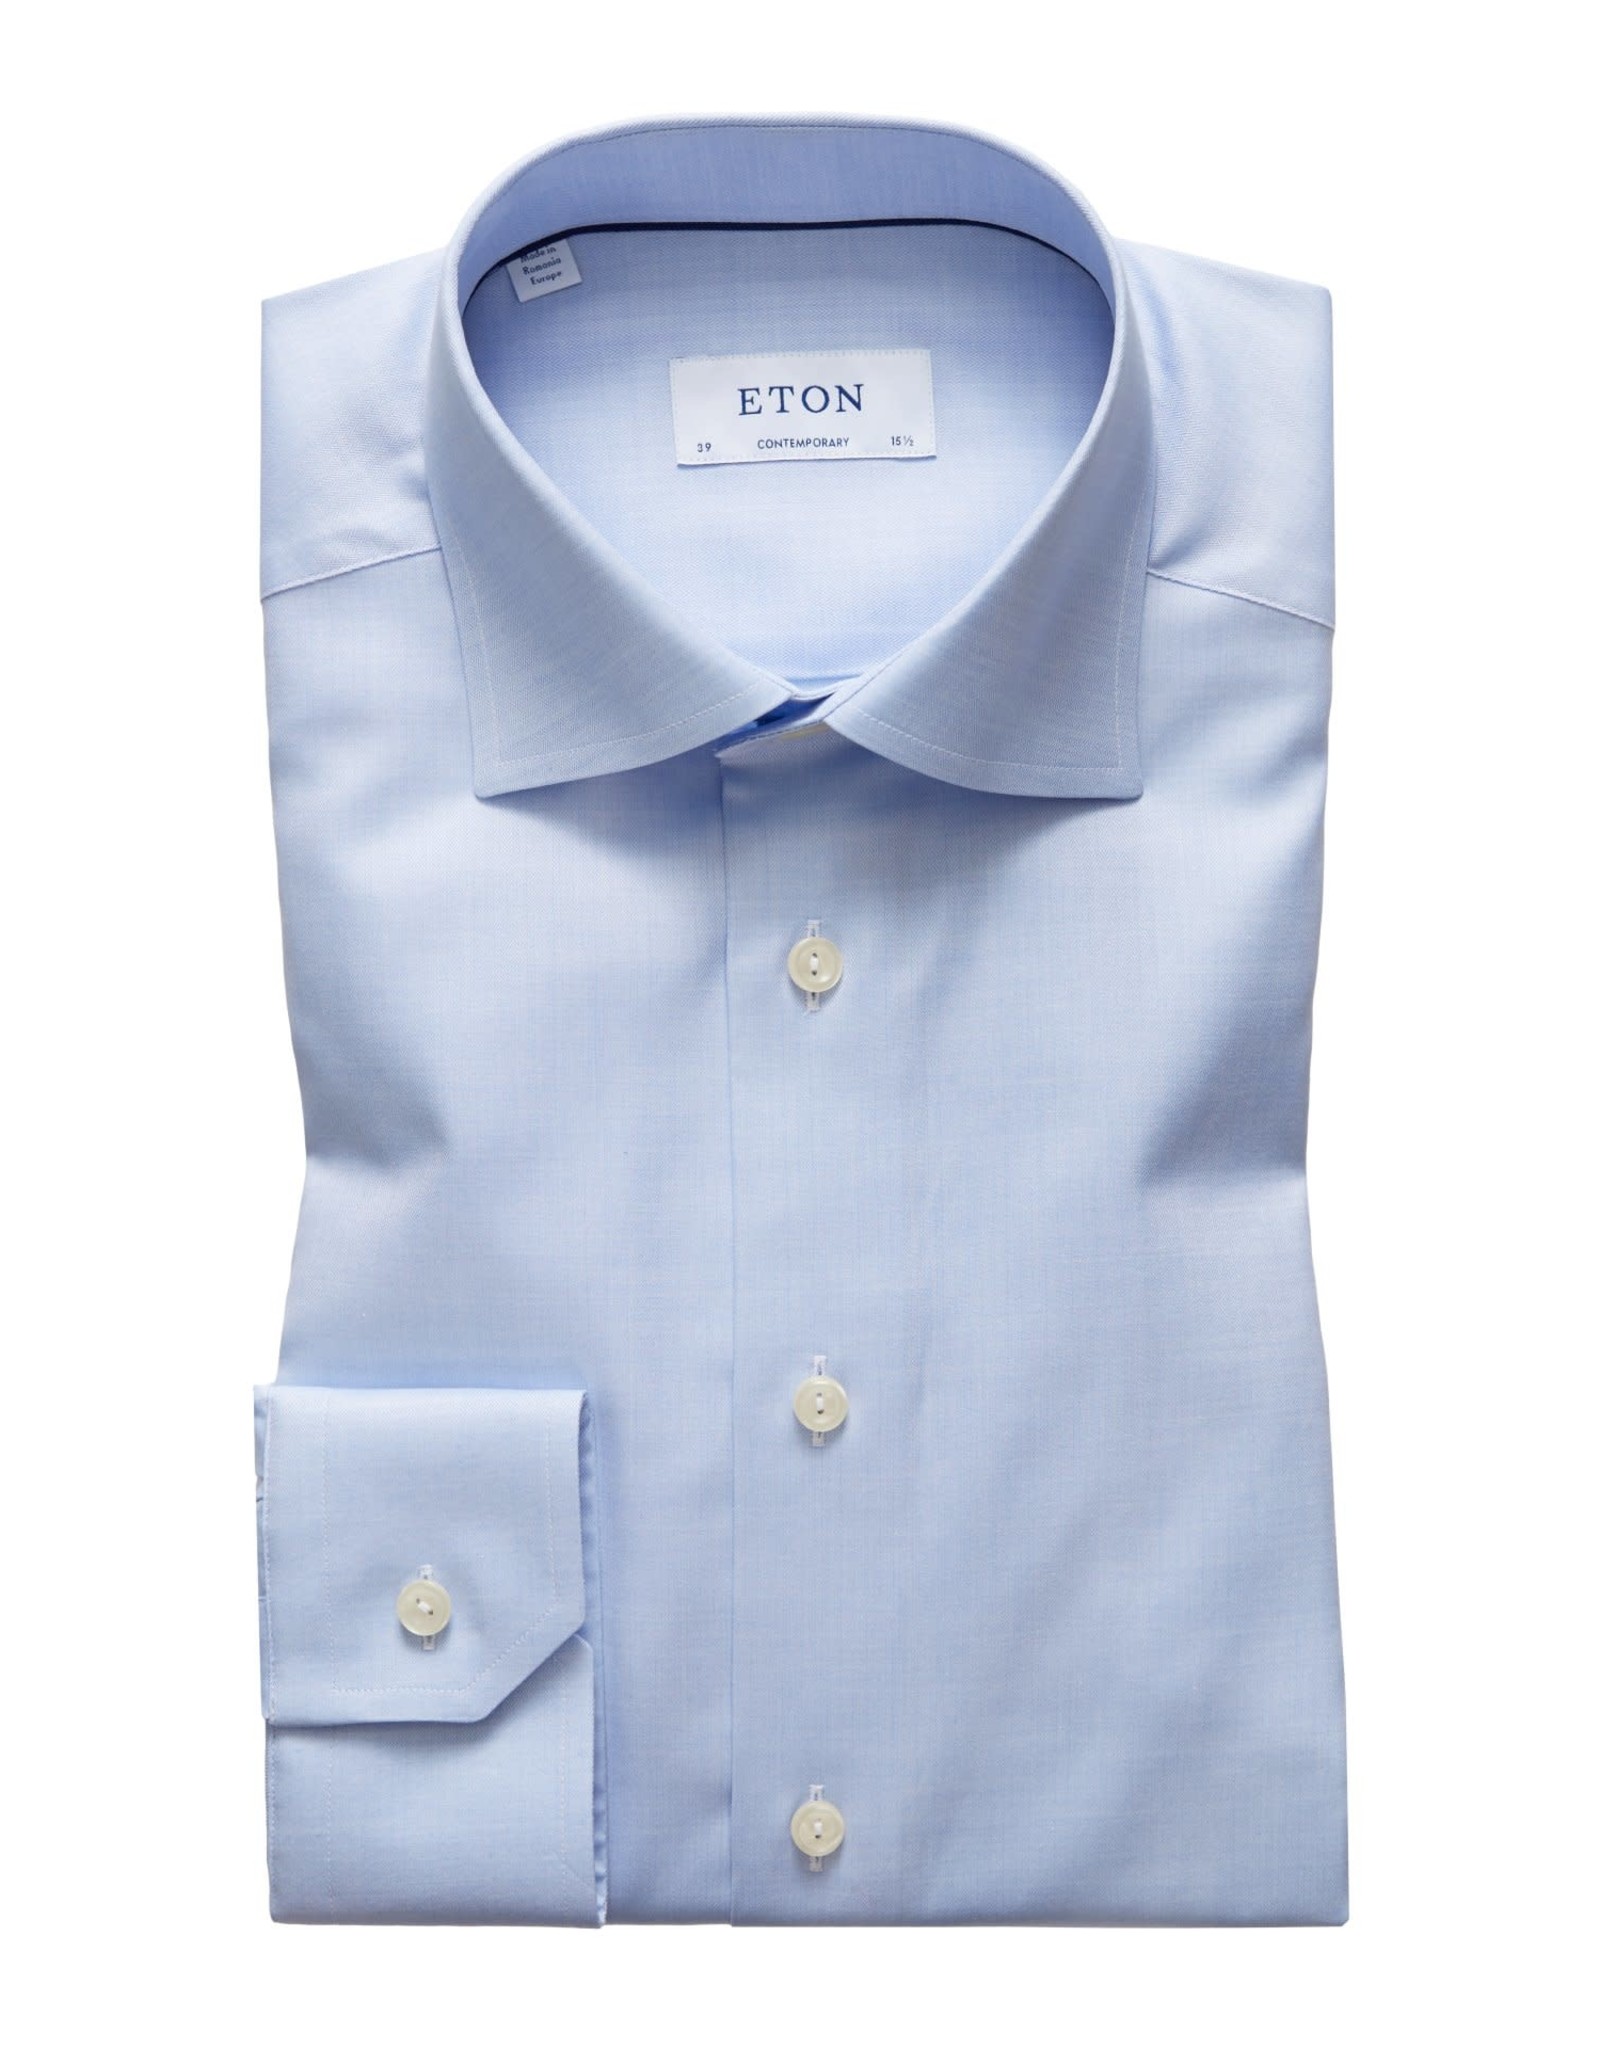 Eton Eton hemd blauw slim 3072-79511/20